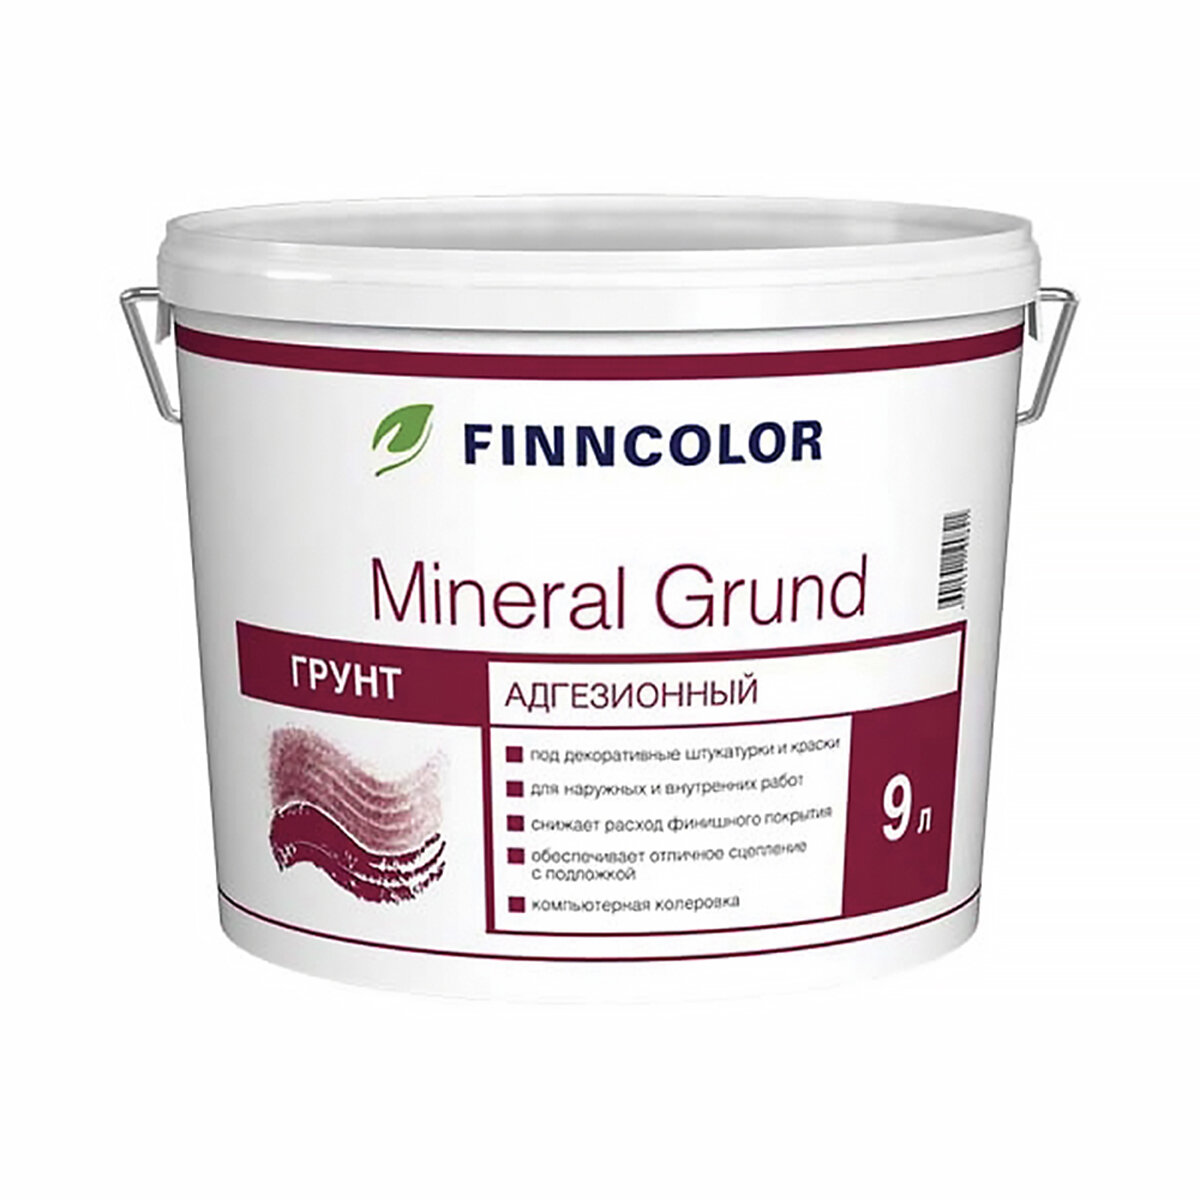 Грунт адгезионный под декоративную штукатурку Finncolor Mineral Grund RPA, 9 л